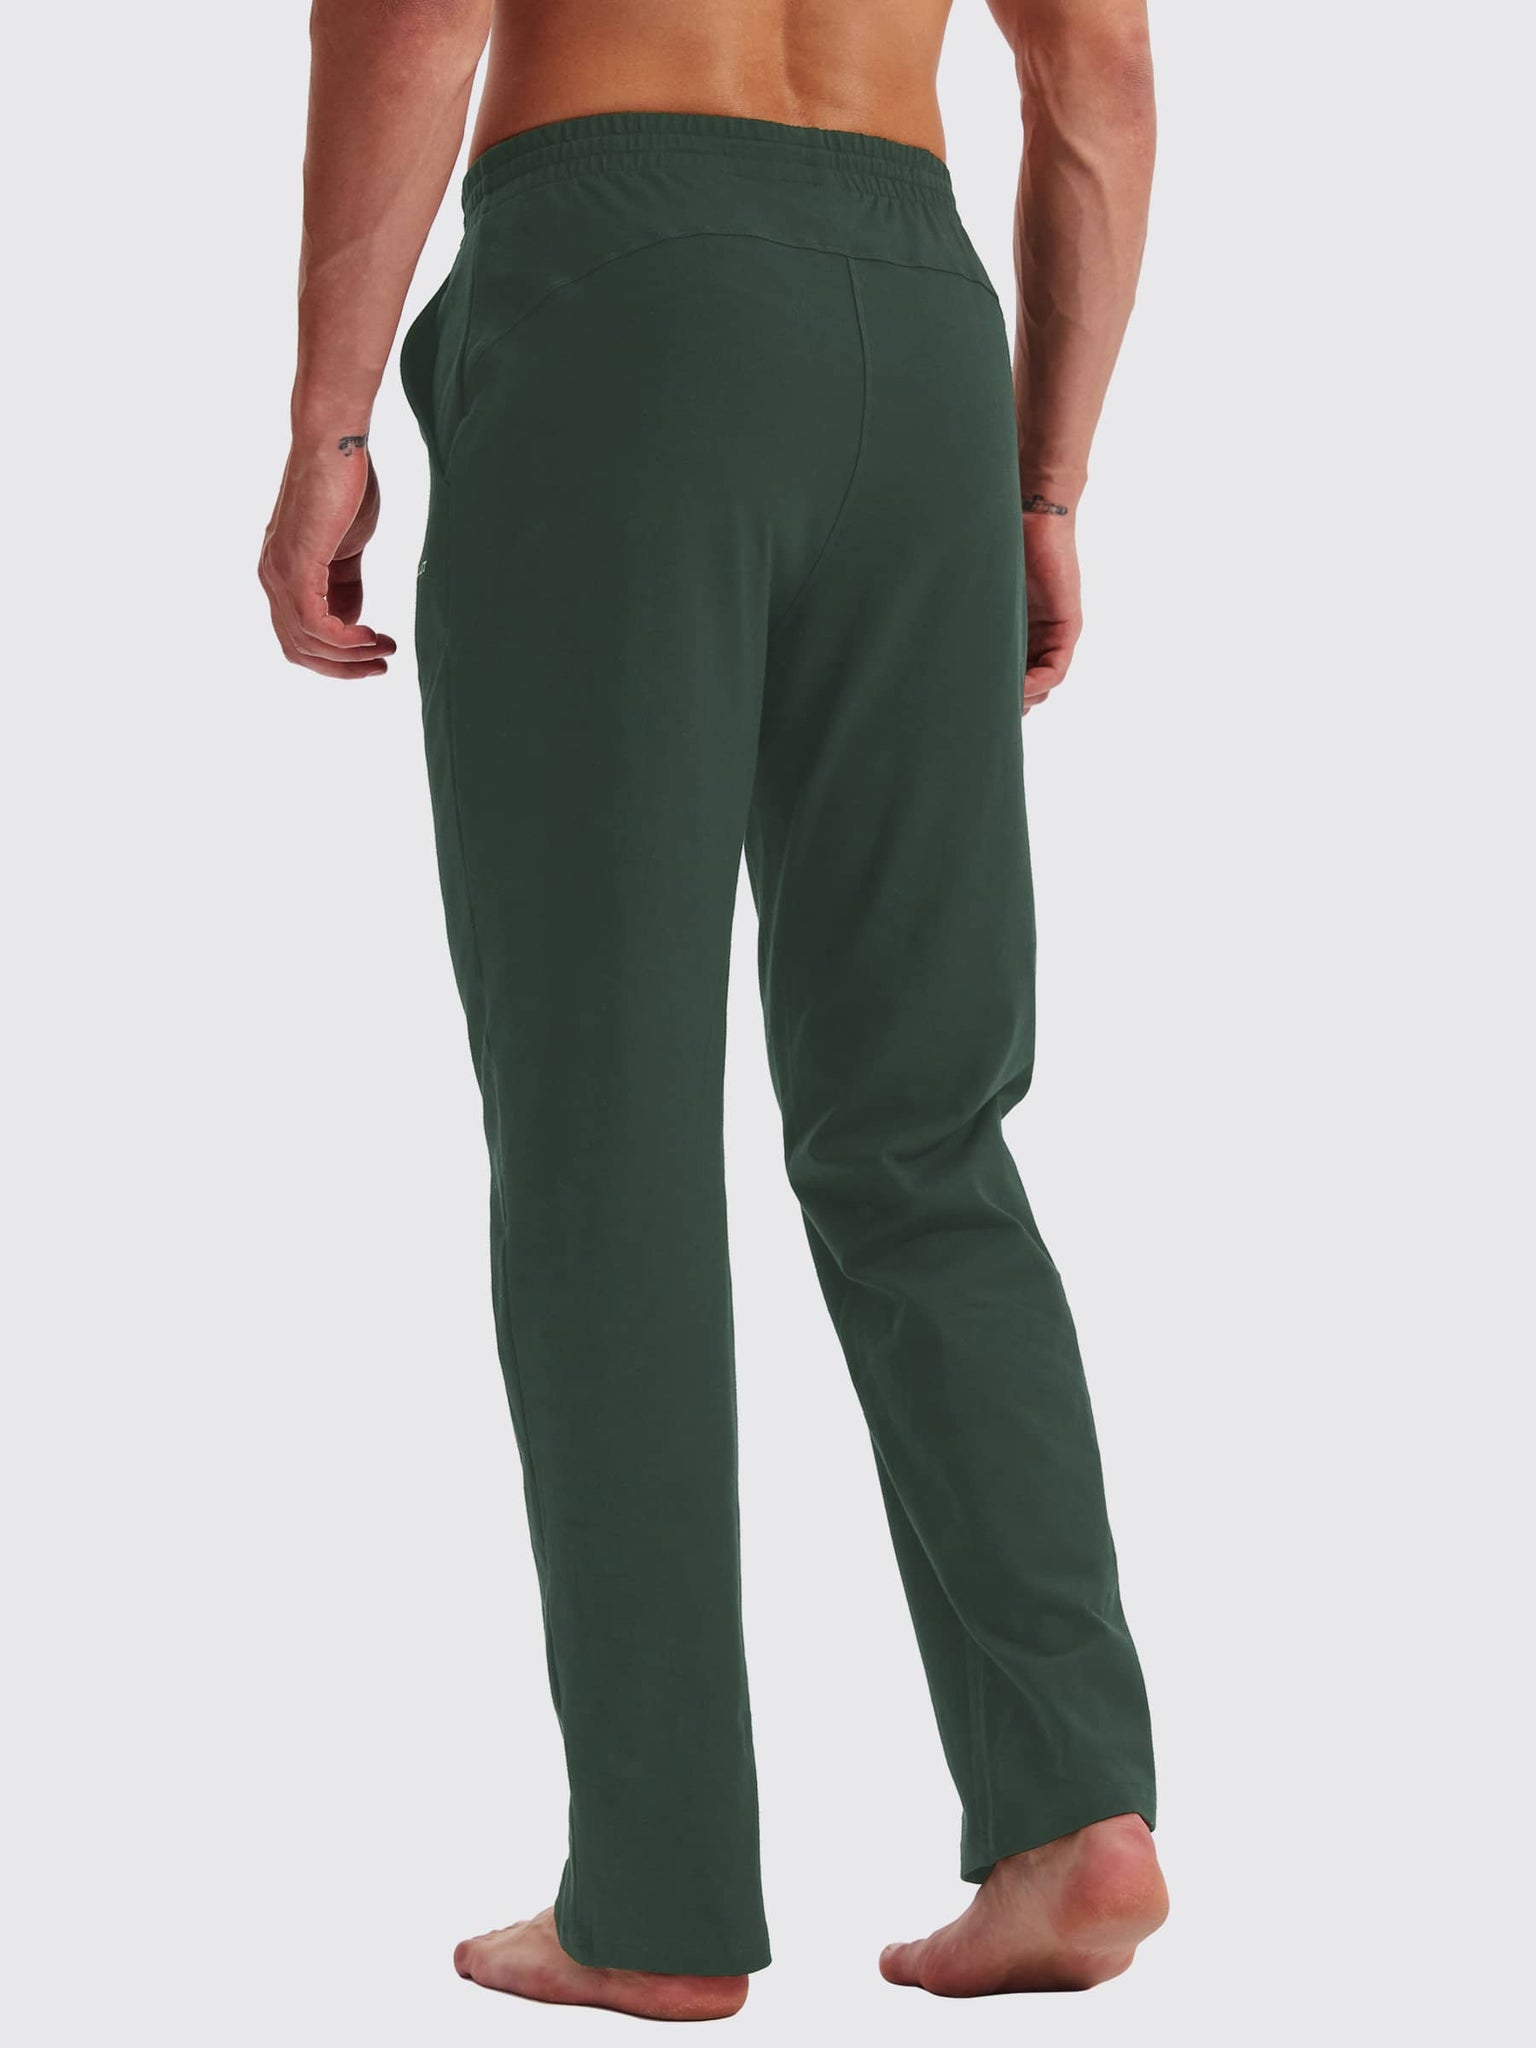 Men's Cotton Yoga Balance Sweatpants_Green_model5